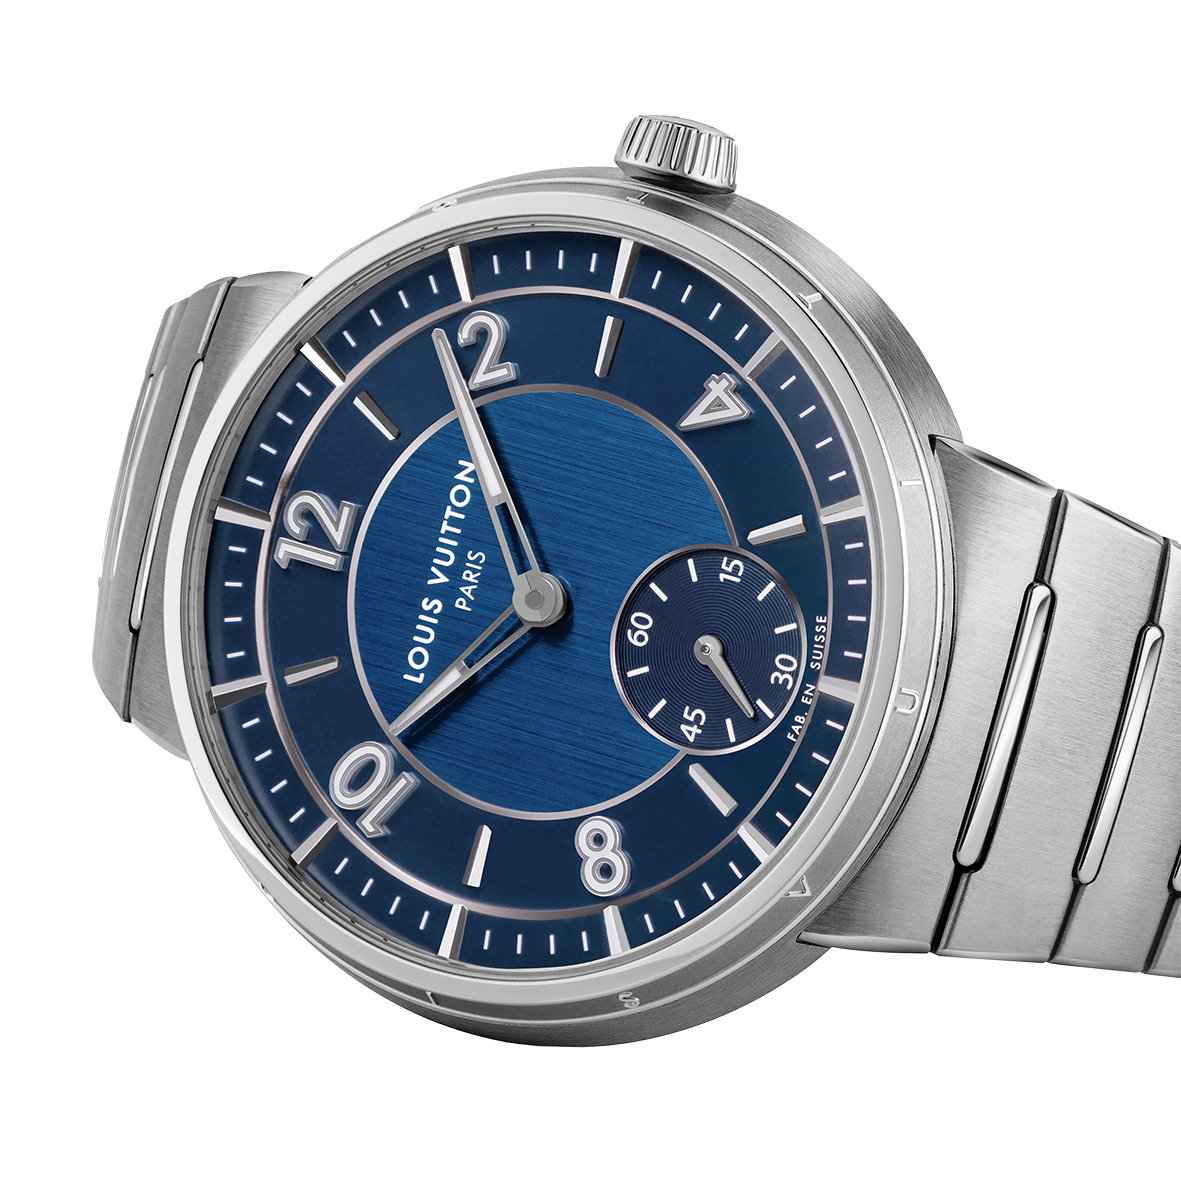 Louis Vuitton Tambour watch celebrates 12 years of watchmaking